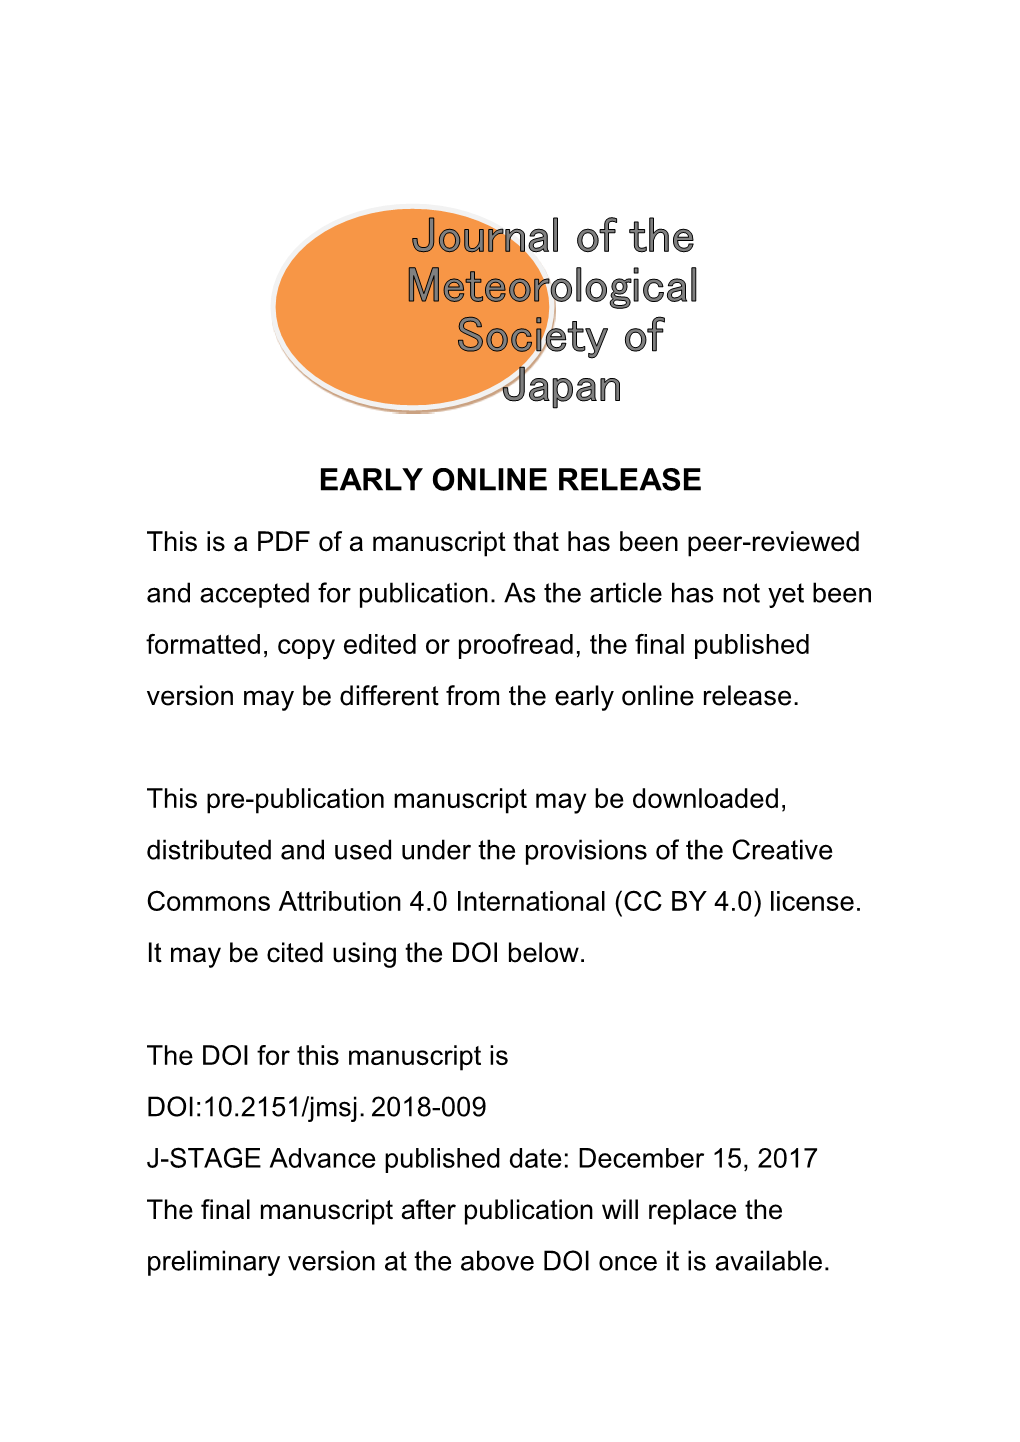 Early Online Release